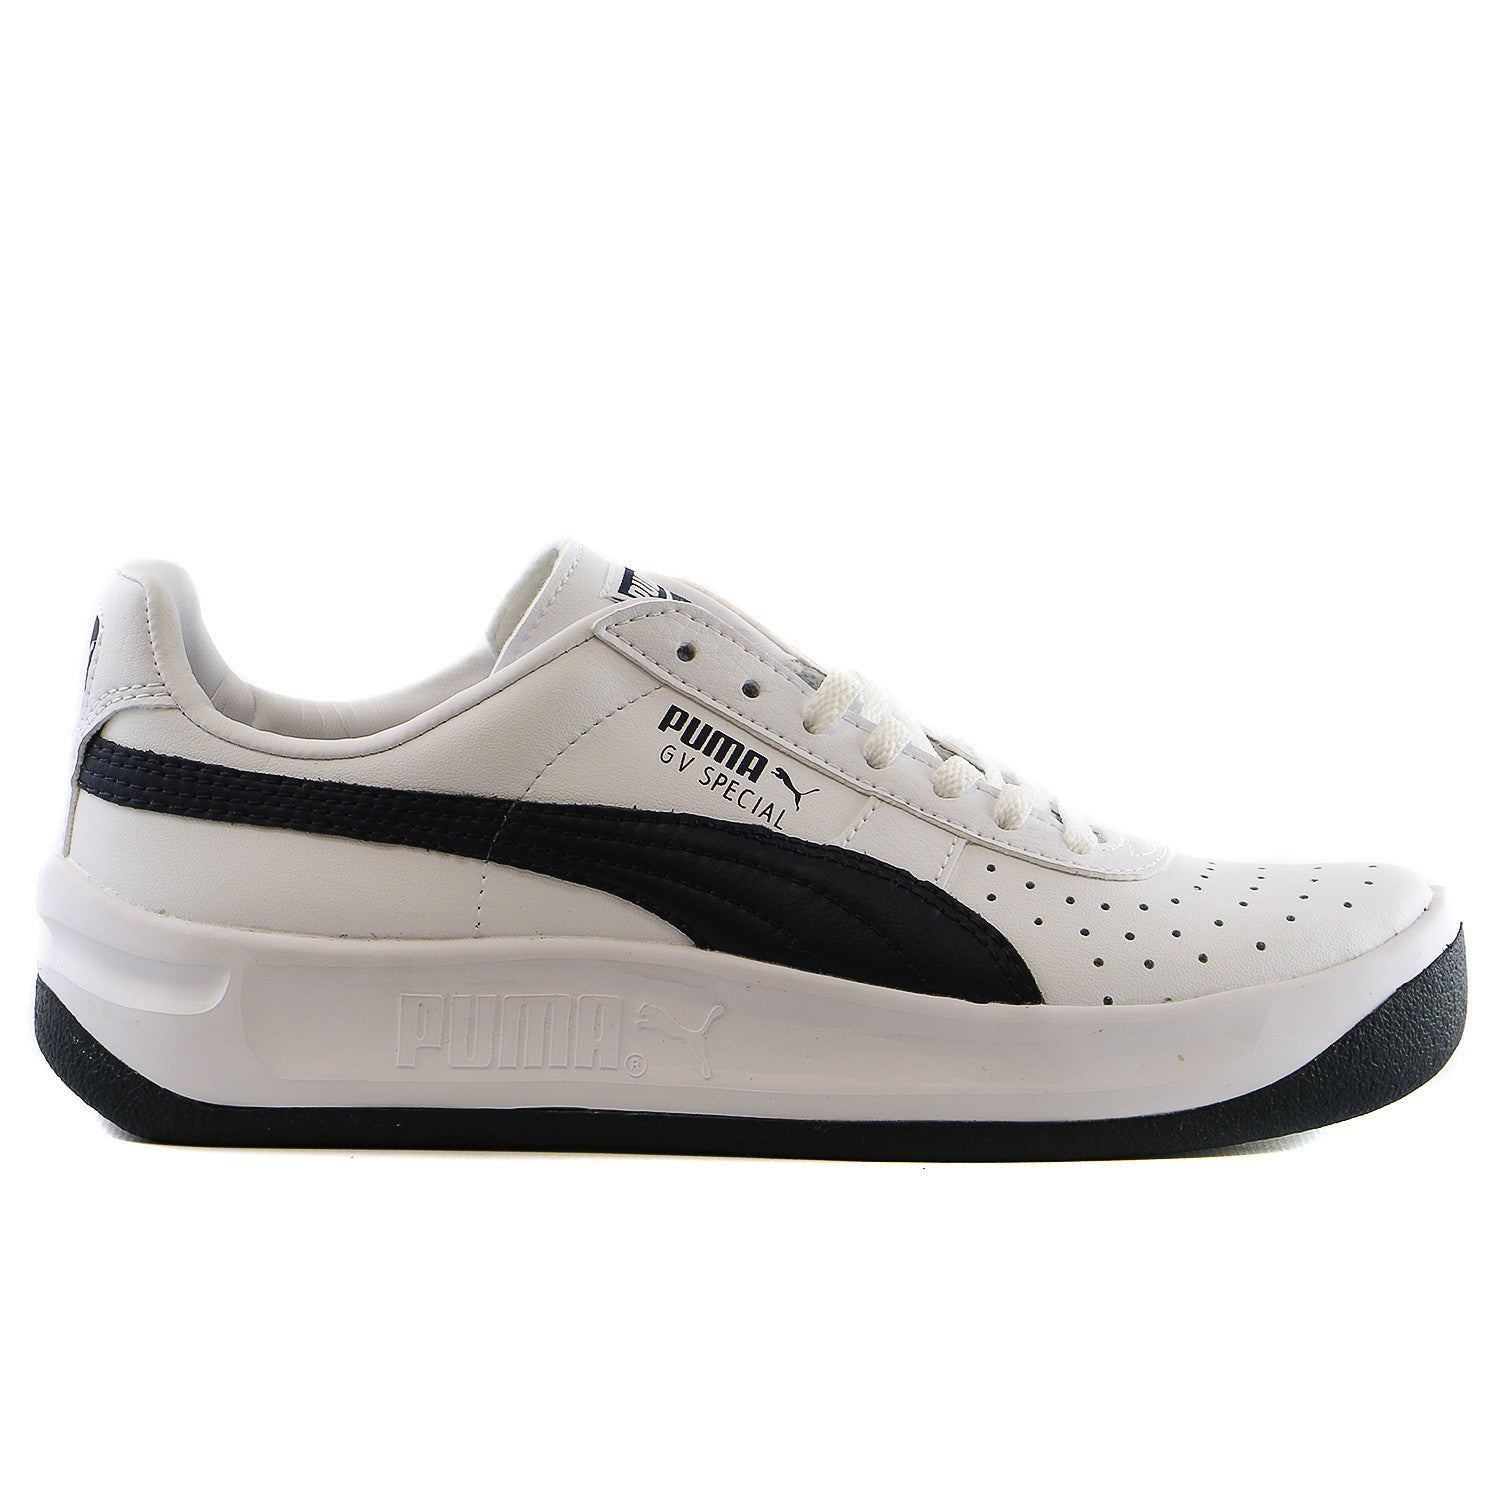 White/New Shoes Special Navy Jr - Puma - Shoplifestyle - GV Boys